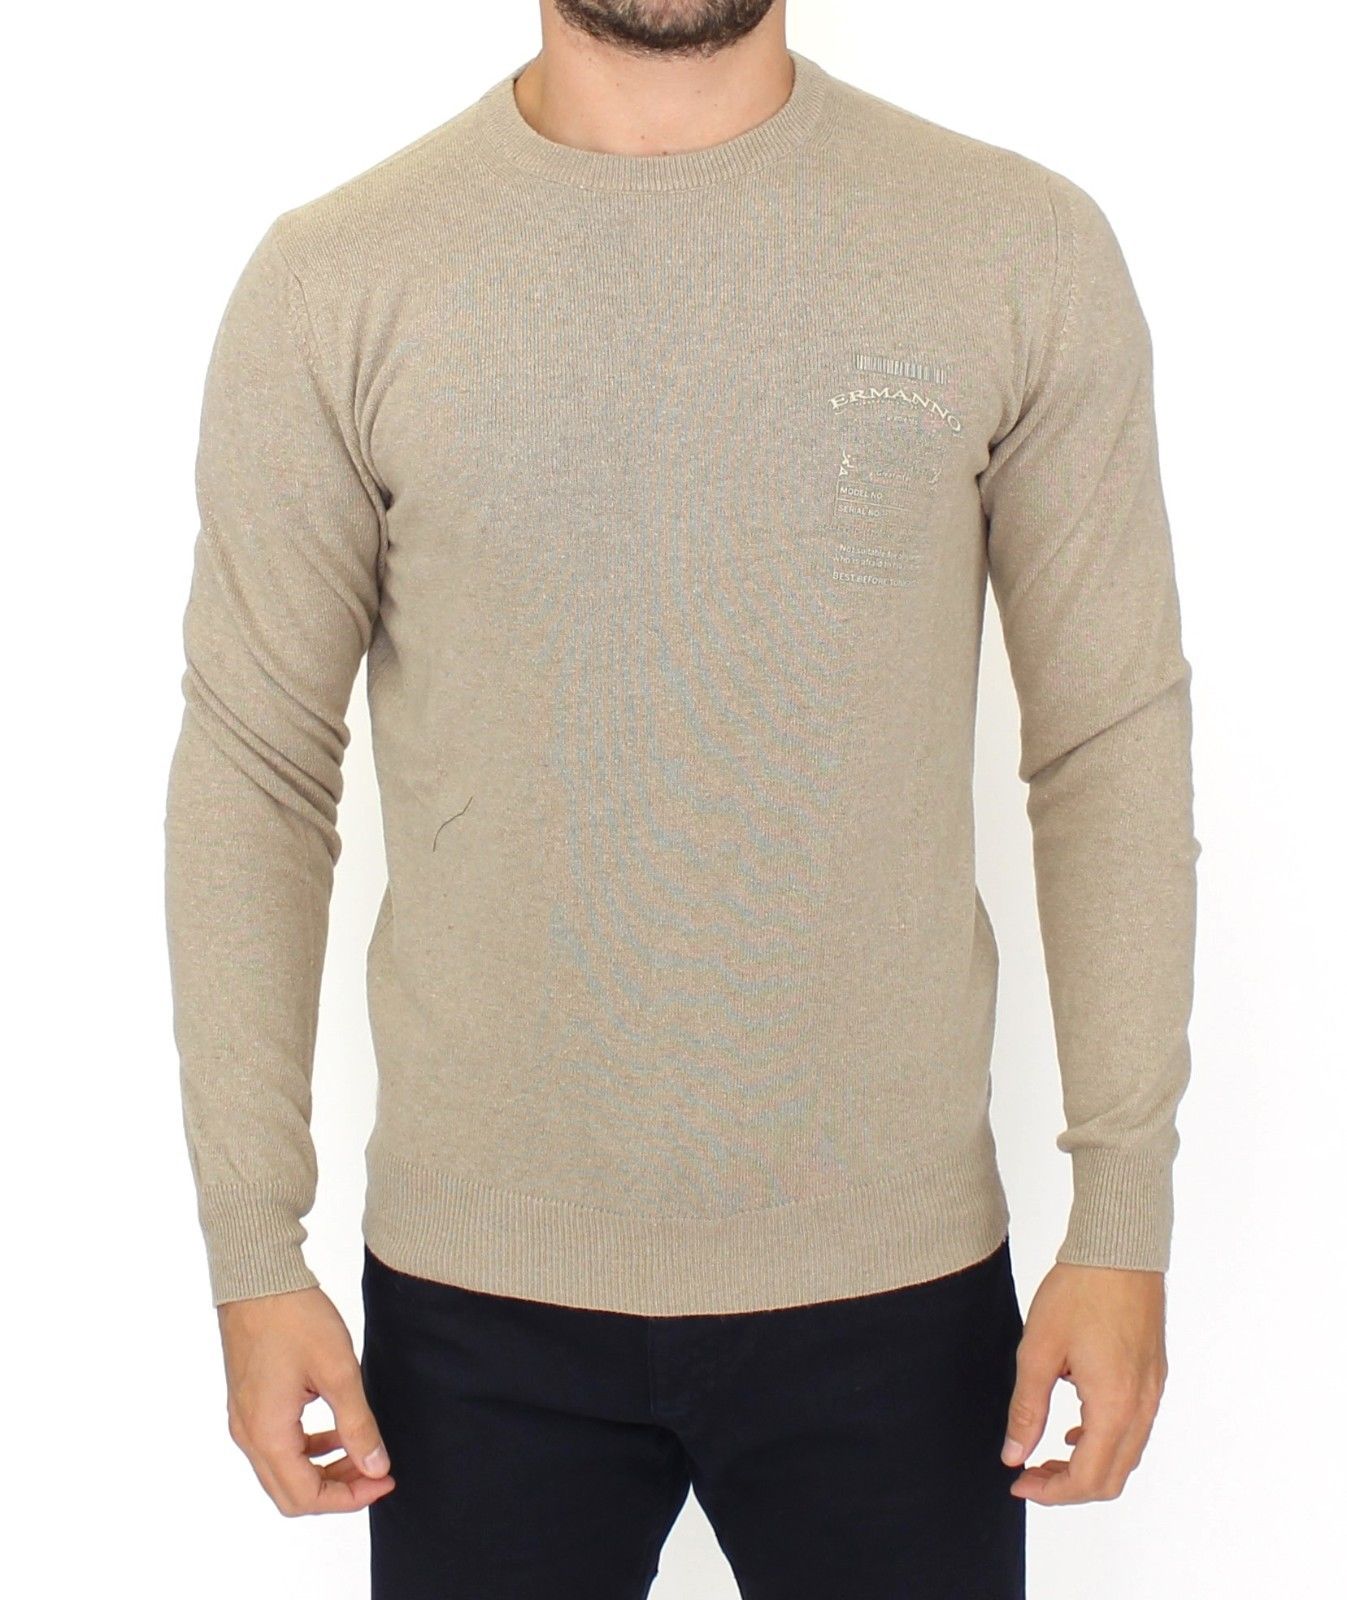 Beige Wool Cashmere Crewneck Pullover Sweater